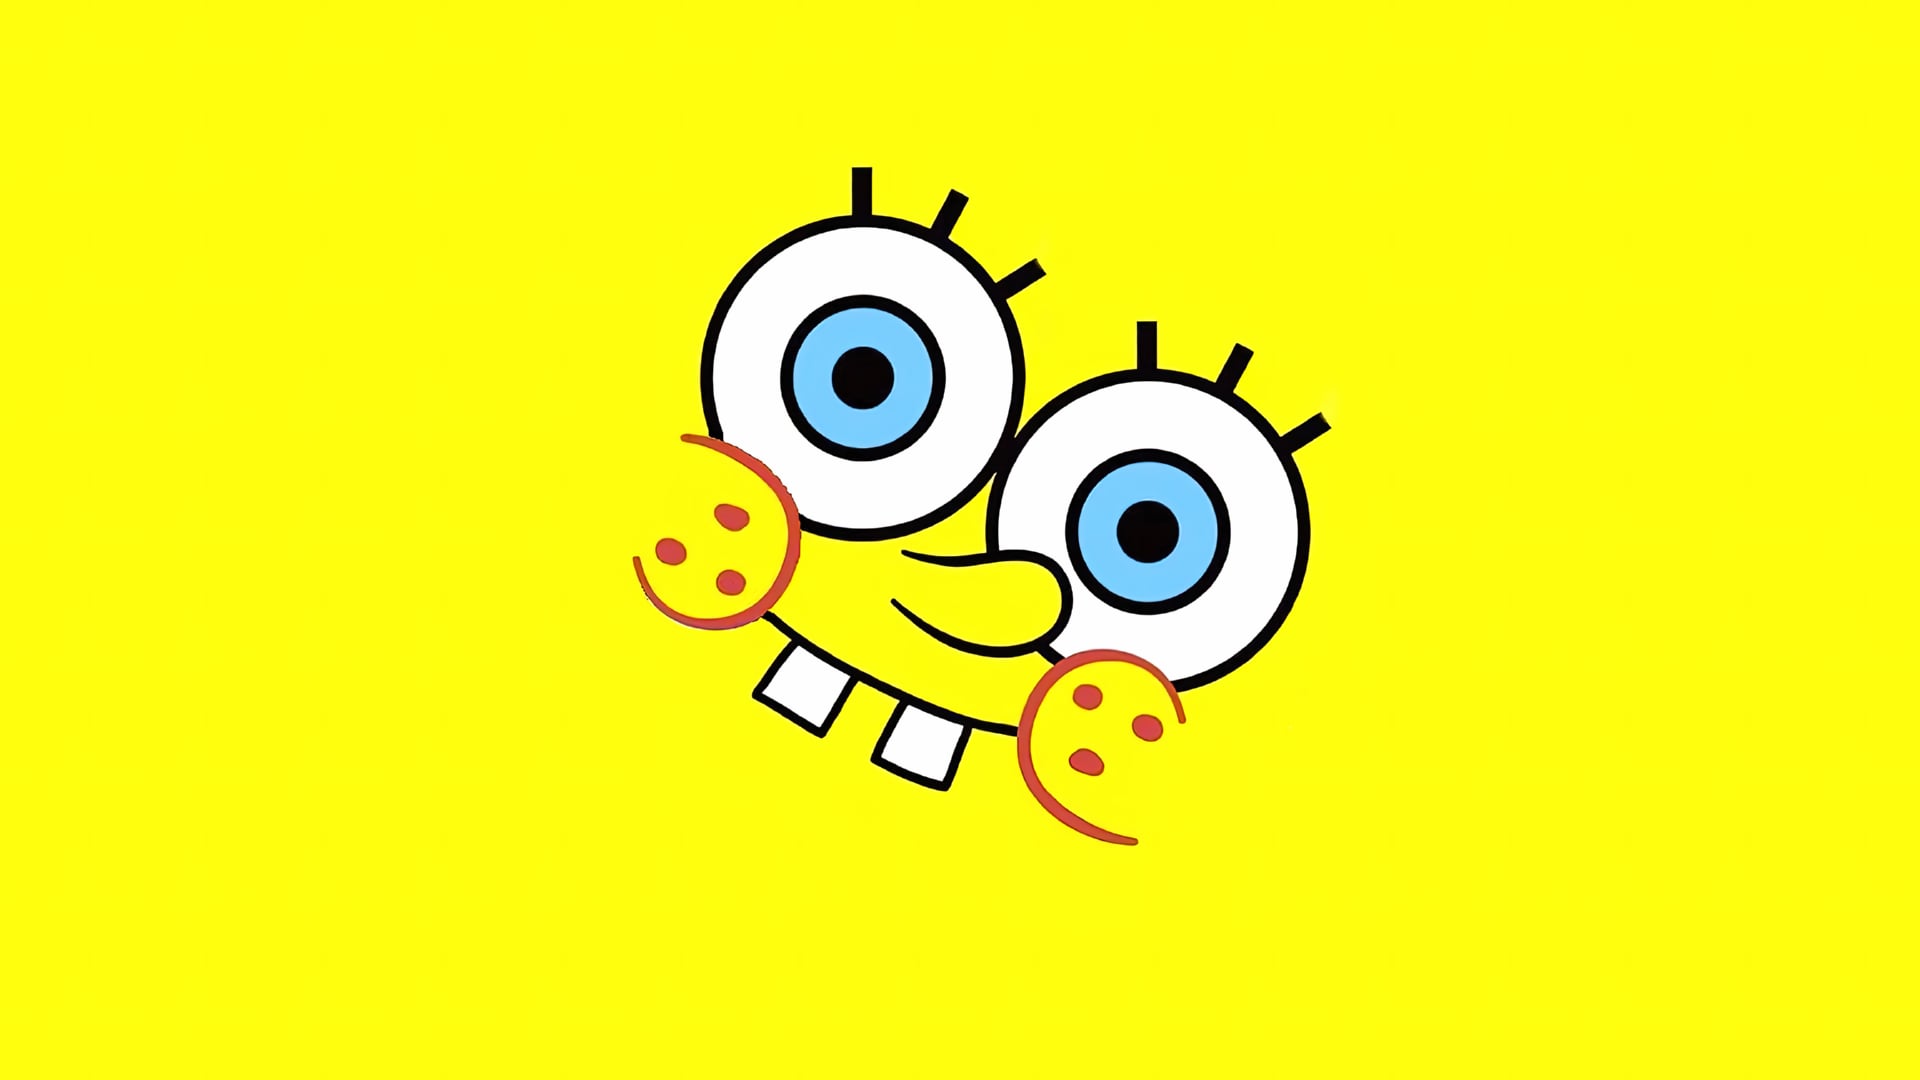 Digital Art SpongeBob SquarePants at 1024 x 1024 iPad size wallpapers HD quality